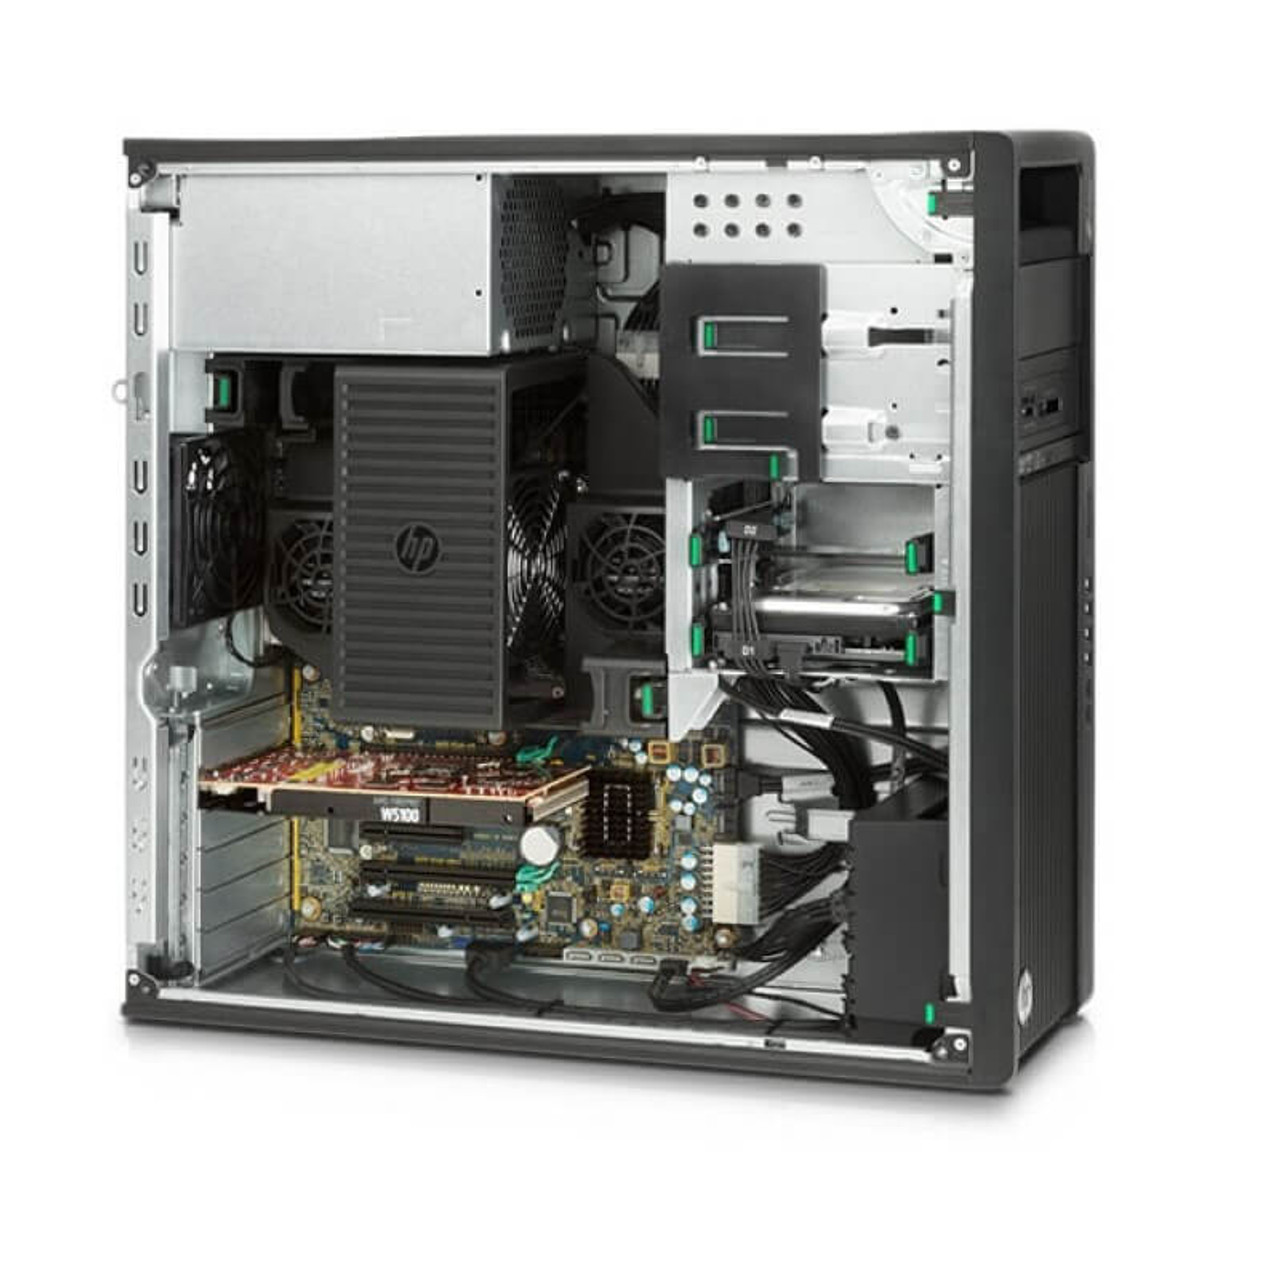 HP Z440 SOLIDWORKS E5-1650v3 6 Cores 3.5Ghz 64GB 500GB NVMe W43000